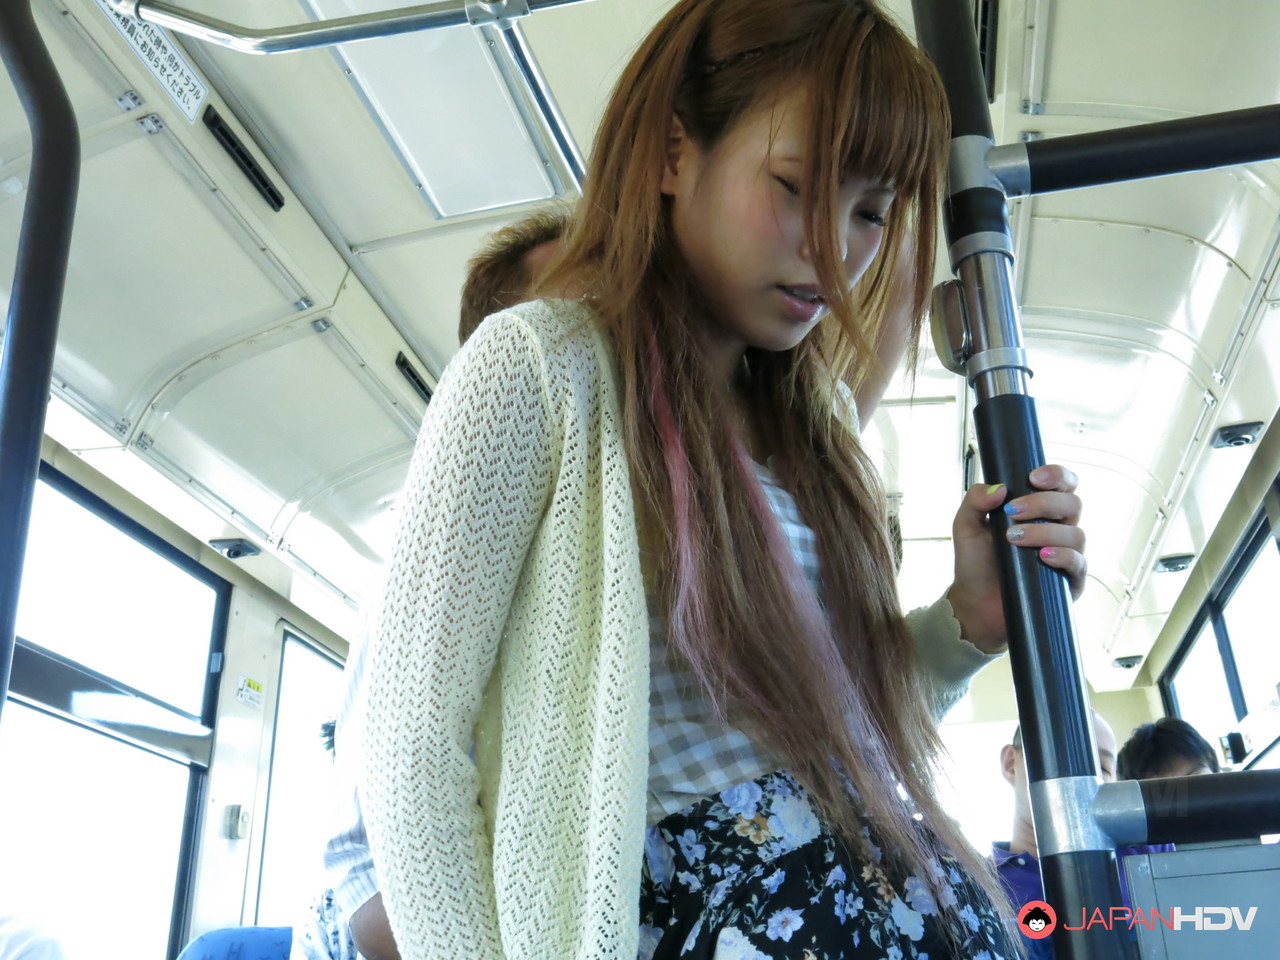 Japanese teen Marin Yuuki gets fucked by a bunch of passengers on the bus 色情照片 #424345719 | Japan HDV Pics, Marin Yuuki, Gangbang, 手机色情